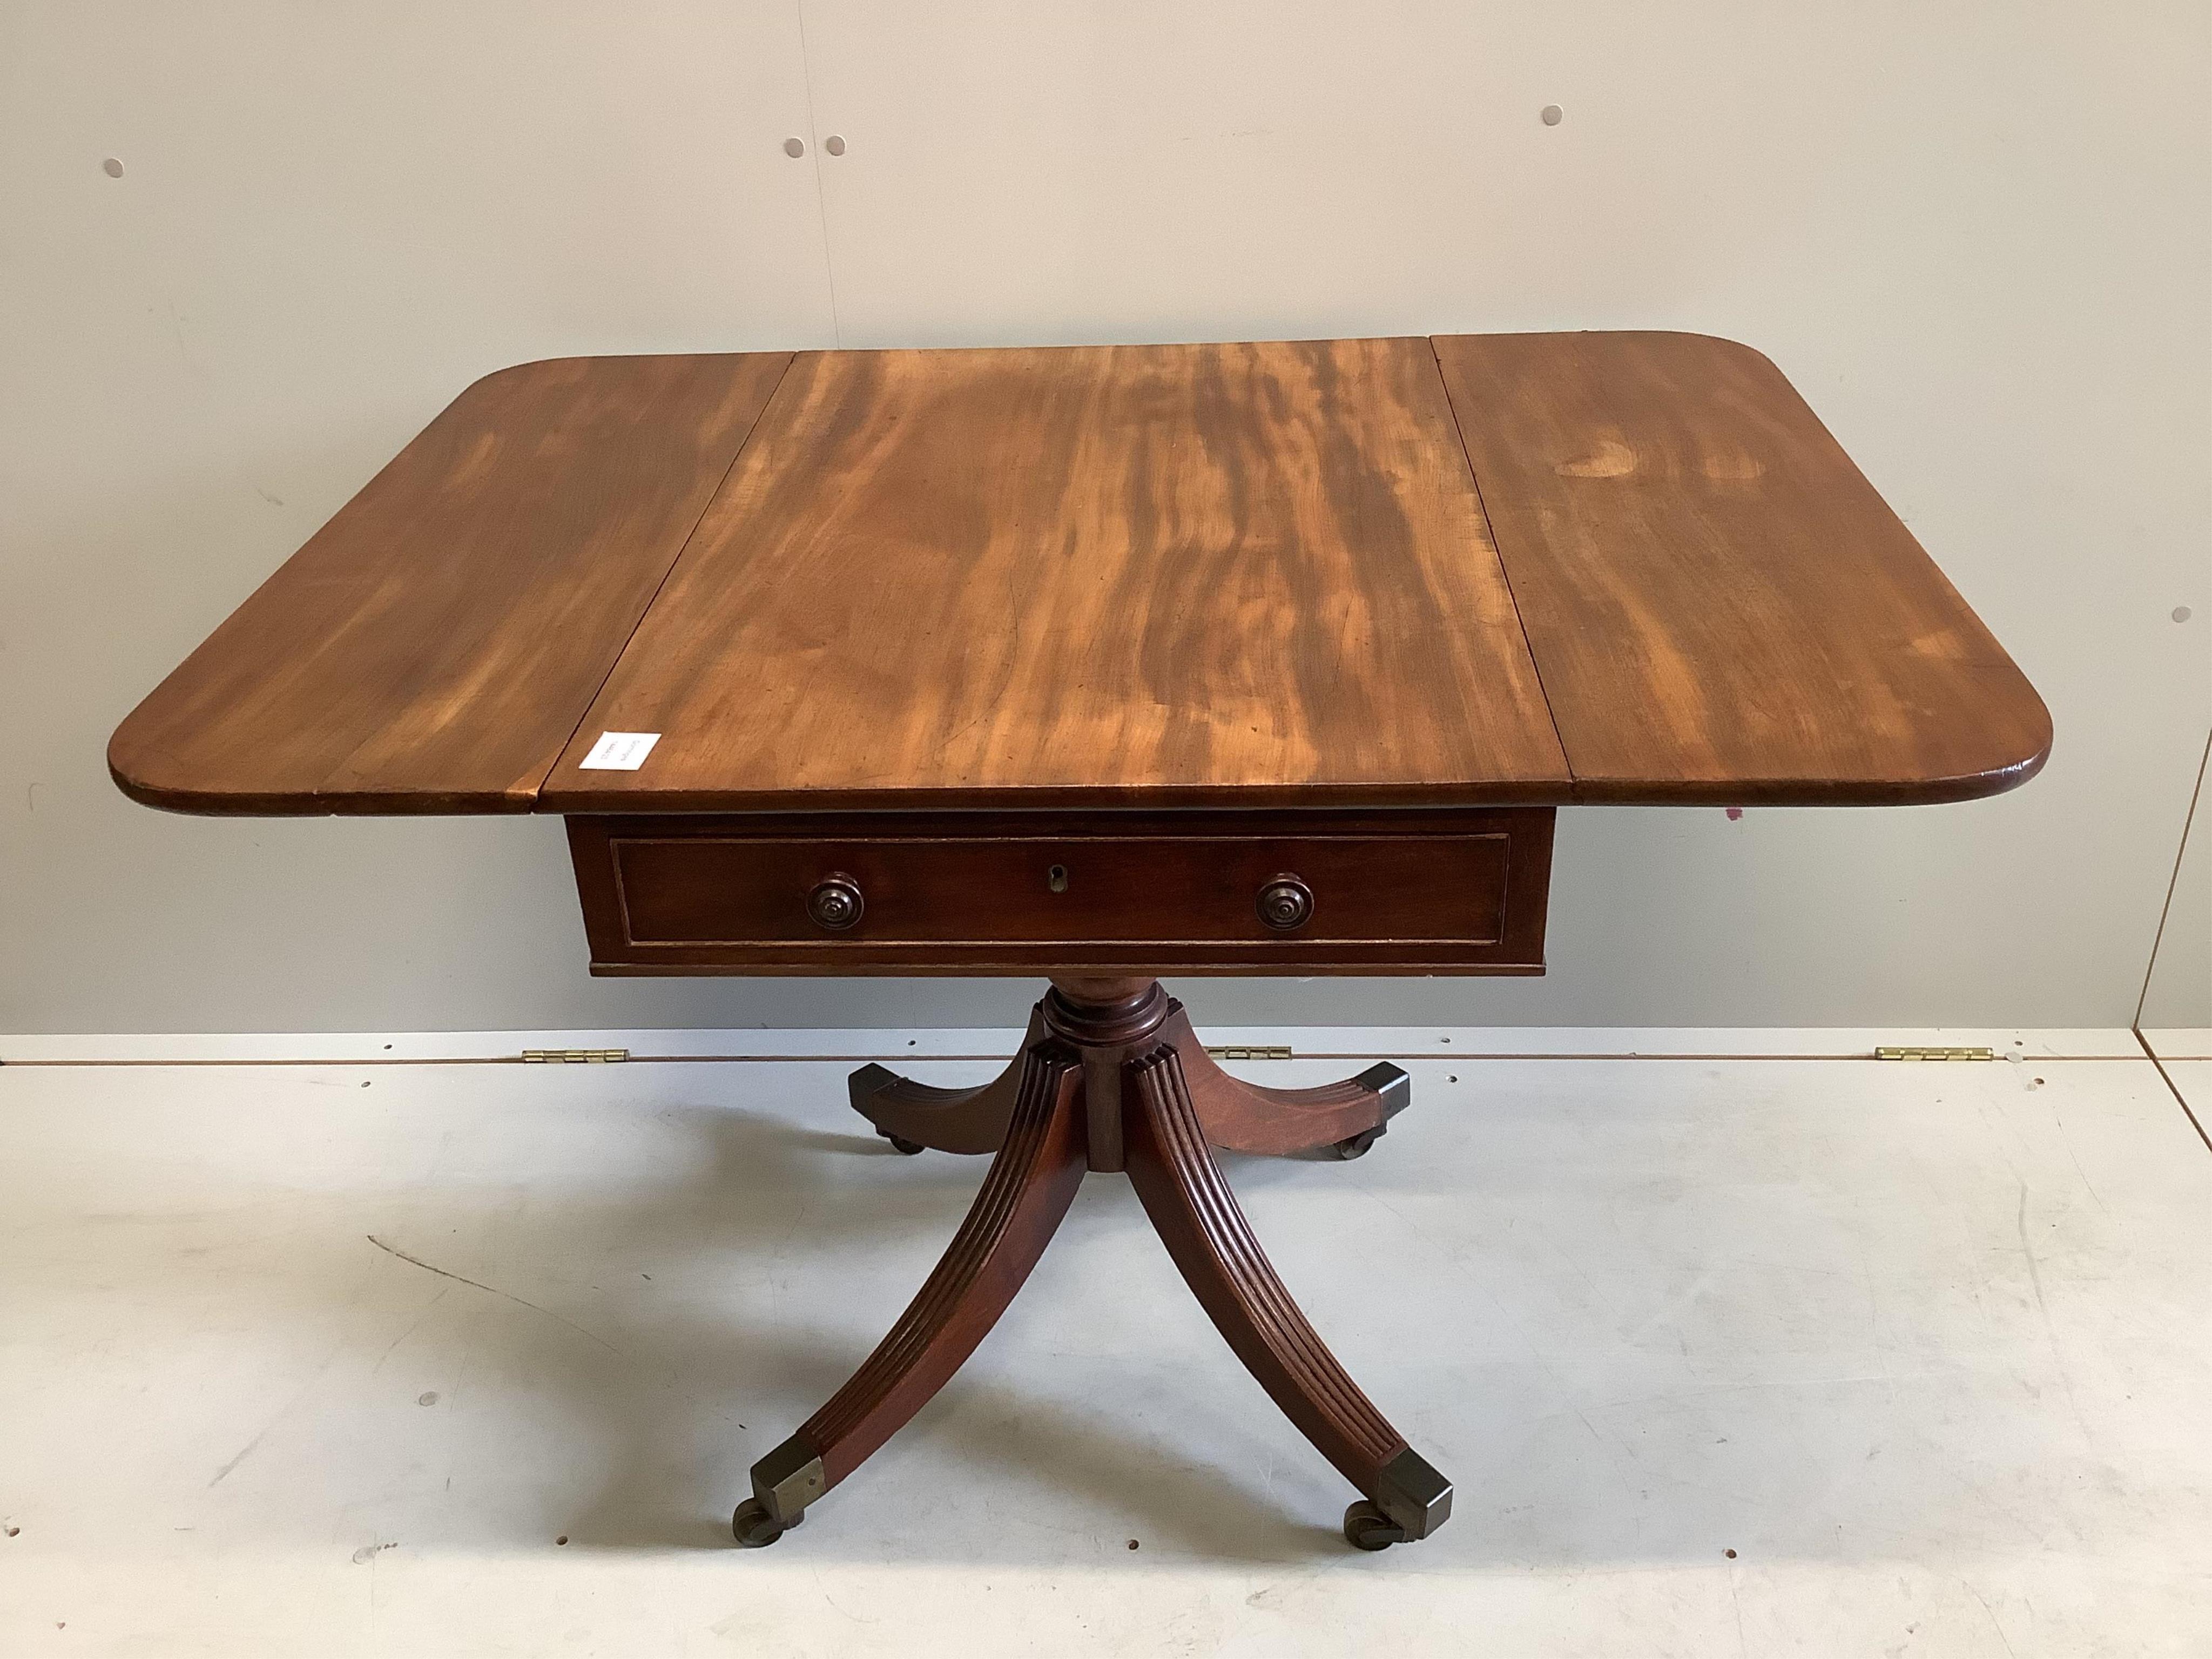 A Regency mahogany Pembroke breakfast table, width 76cm, depth 54cm, height 73cm. Condition - fair